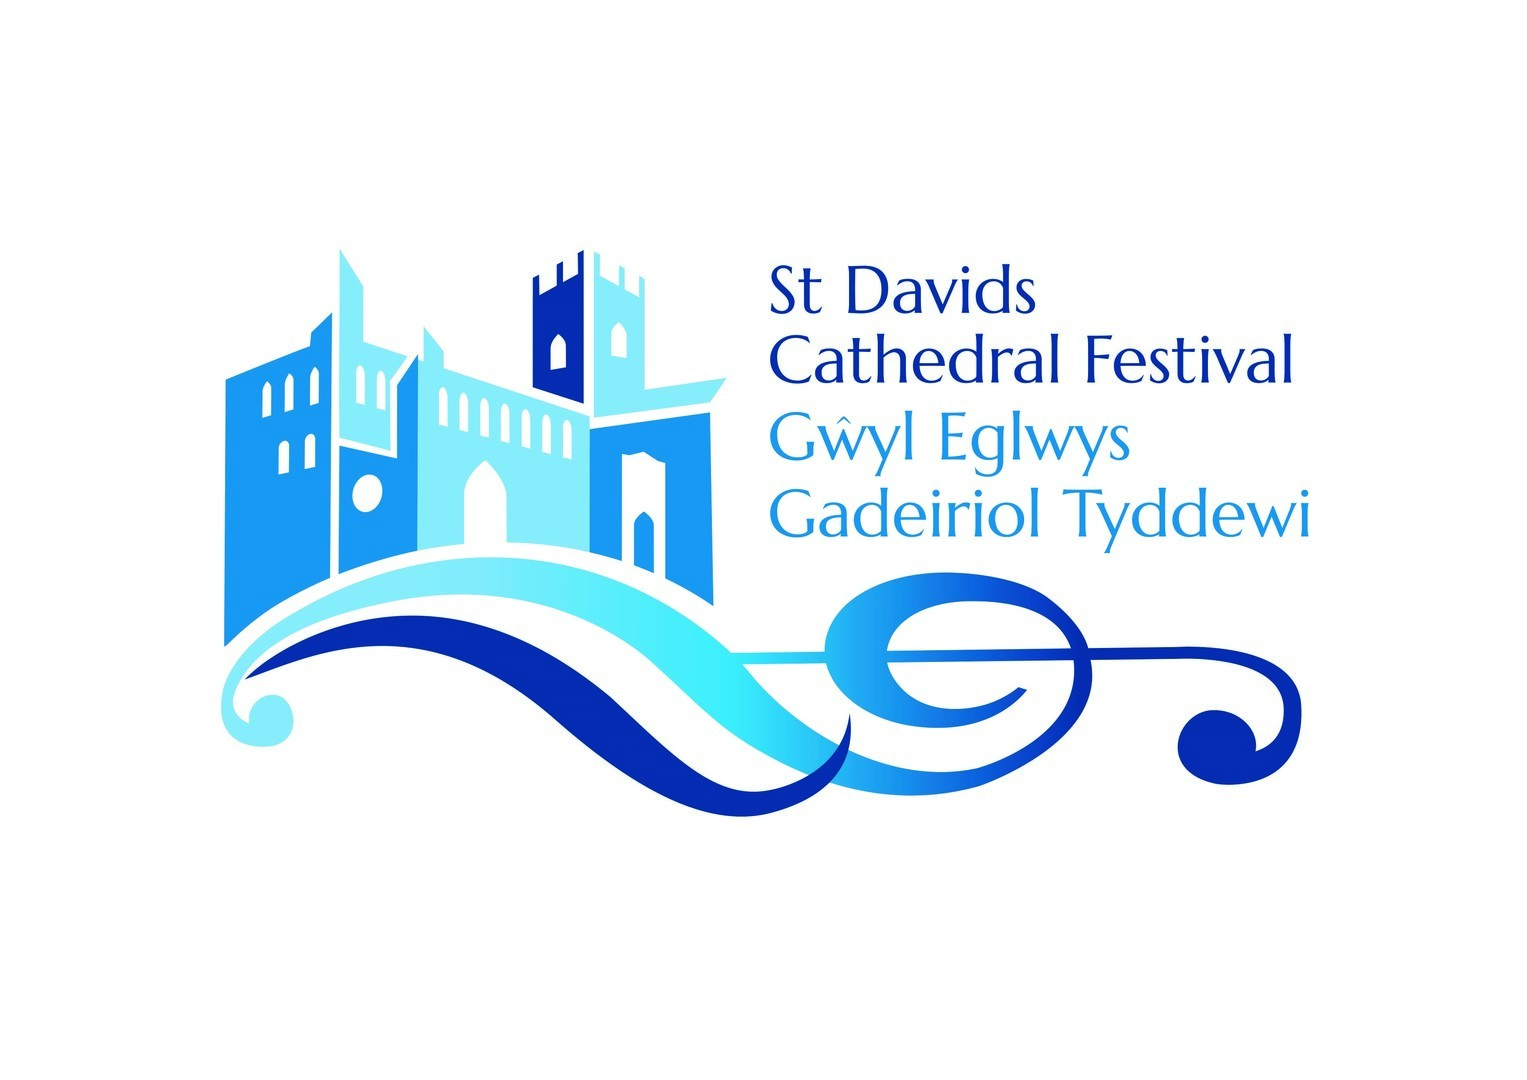 St Davids Cathedral Festival www.stdavidscathedralfestival.org.uk, St Davids, Wales, United Kingdom